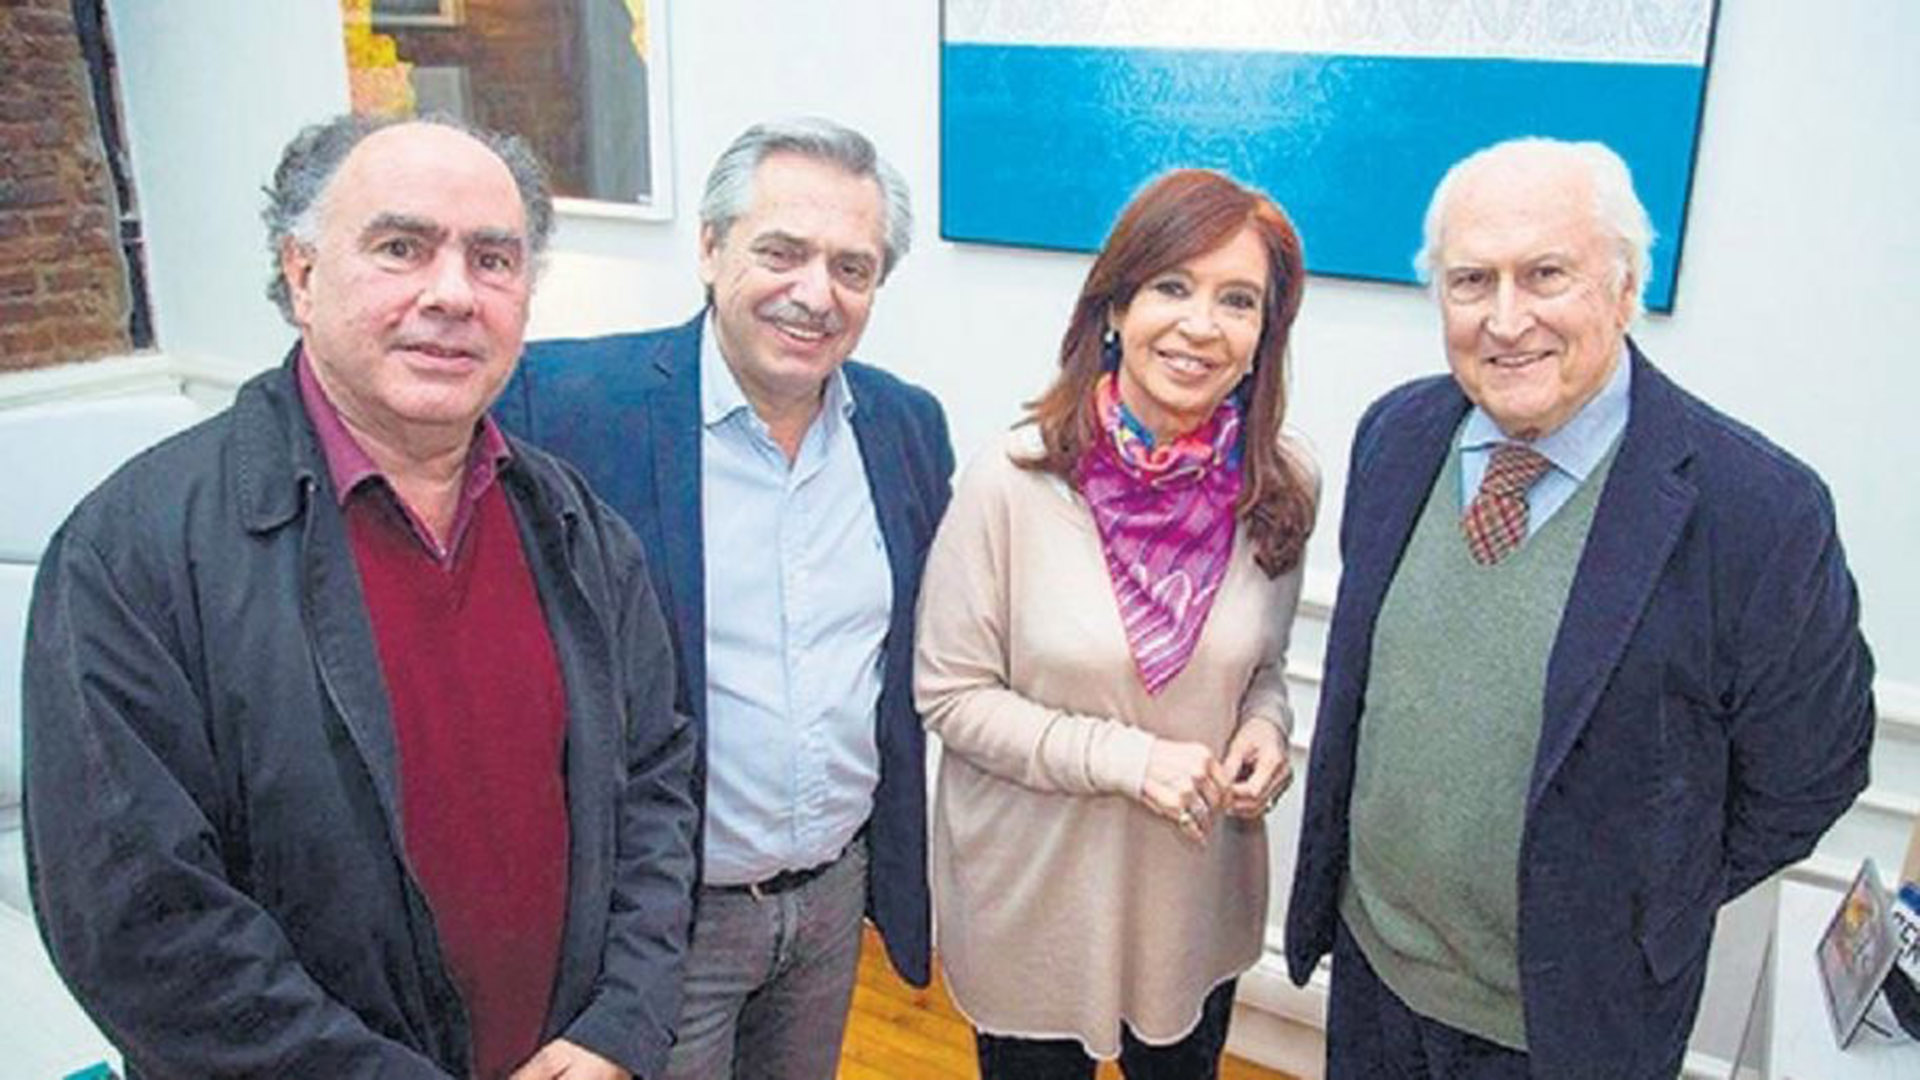 Fernando "Pino" Solanas junto a Cristina Kirchner, Alberto Fernández y Mario Cafiero